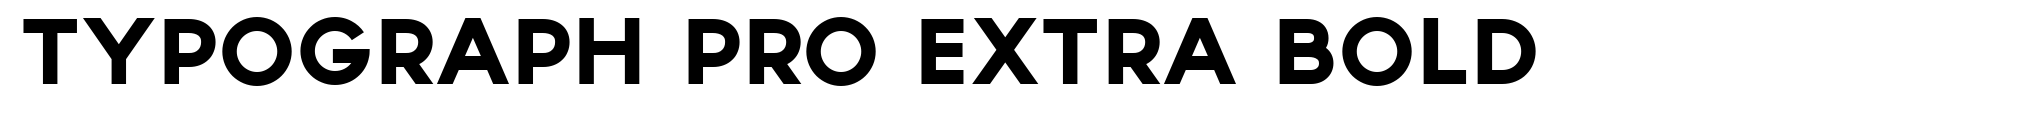 Typograph Pro Extra Bold image